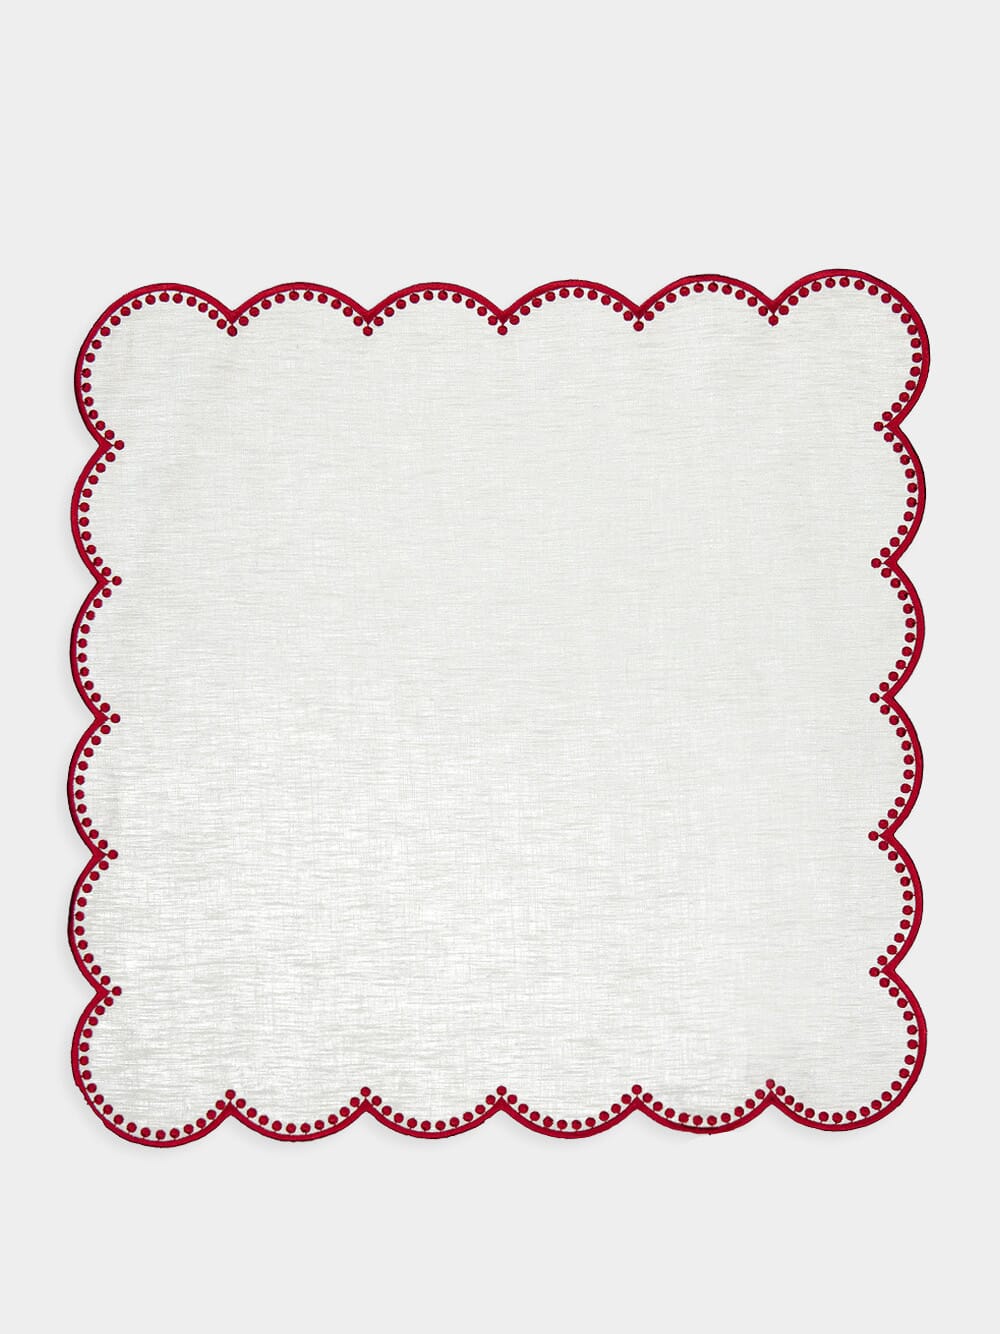 Cascais White Linen Napkin with Red Dots Border